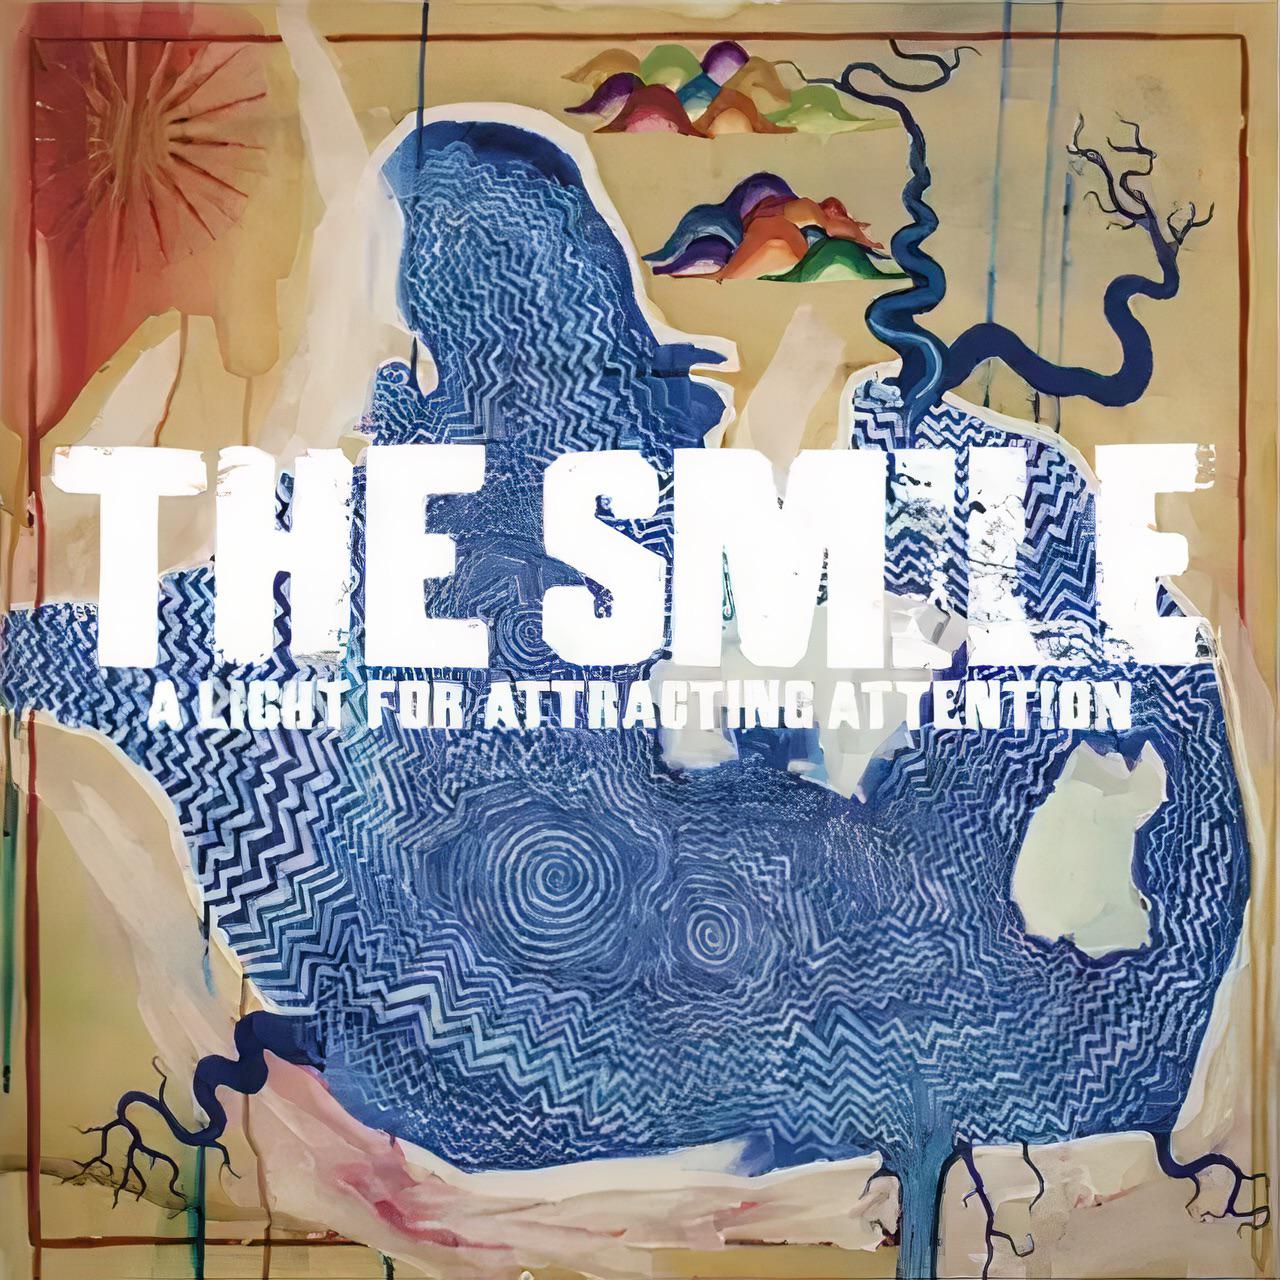 The Smile — Waving A White Flag cover artwork